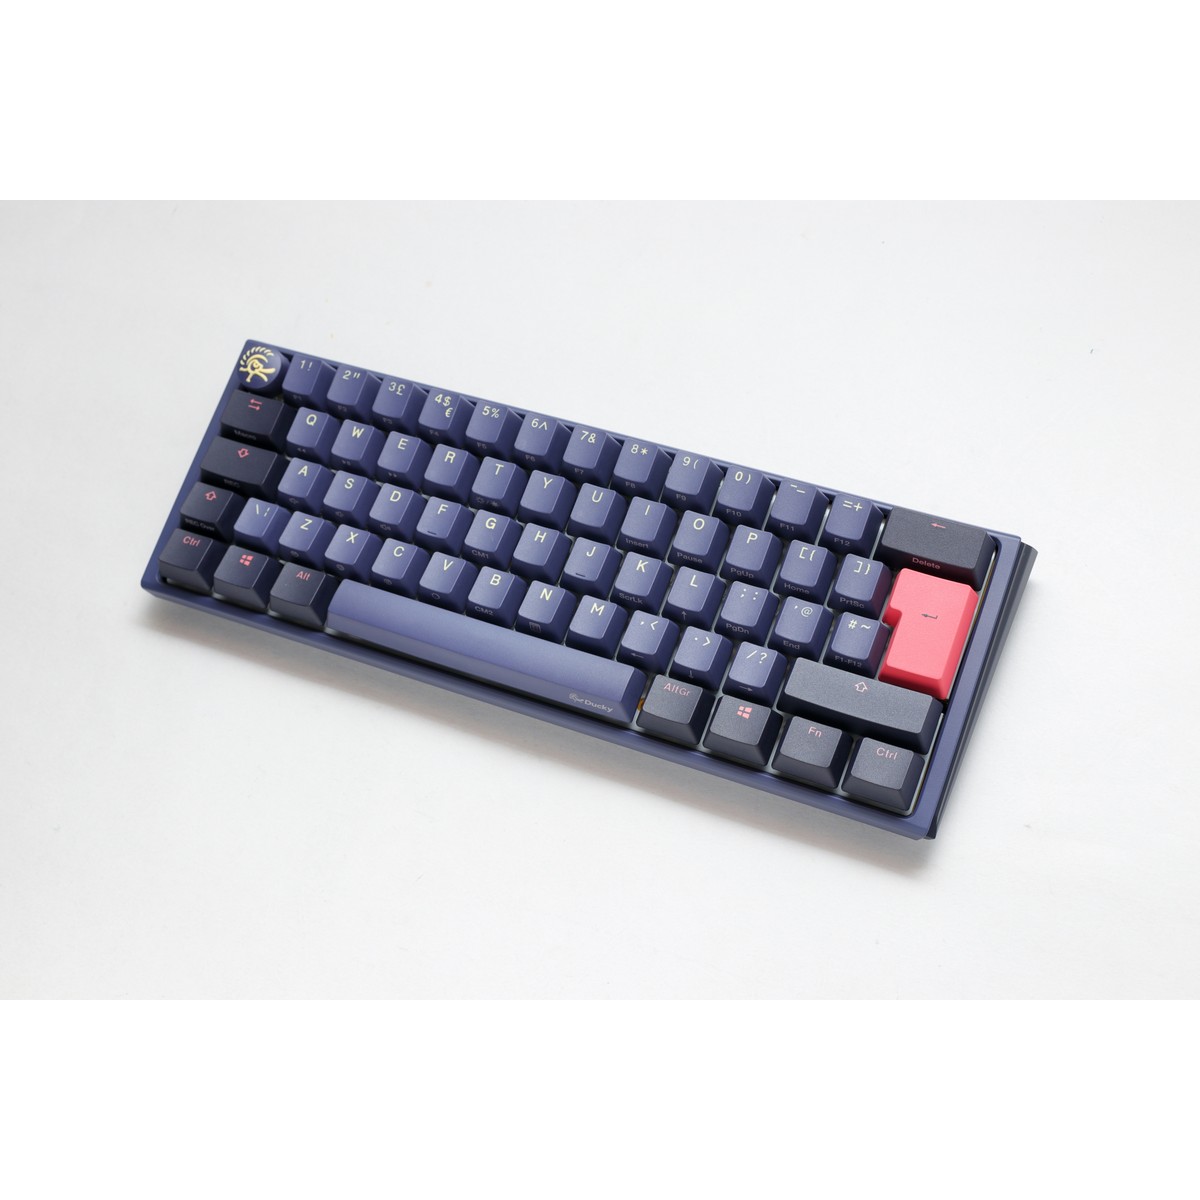 Ducky - Ducky One 3 Cosmic Mini 60% USB RGB Mechanical Gaming Keyboard Cherry MX Blue Switch - UK Layout